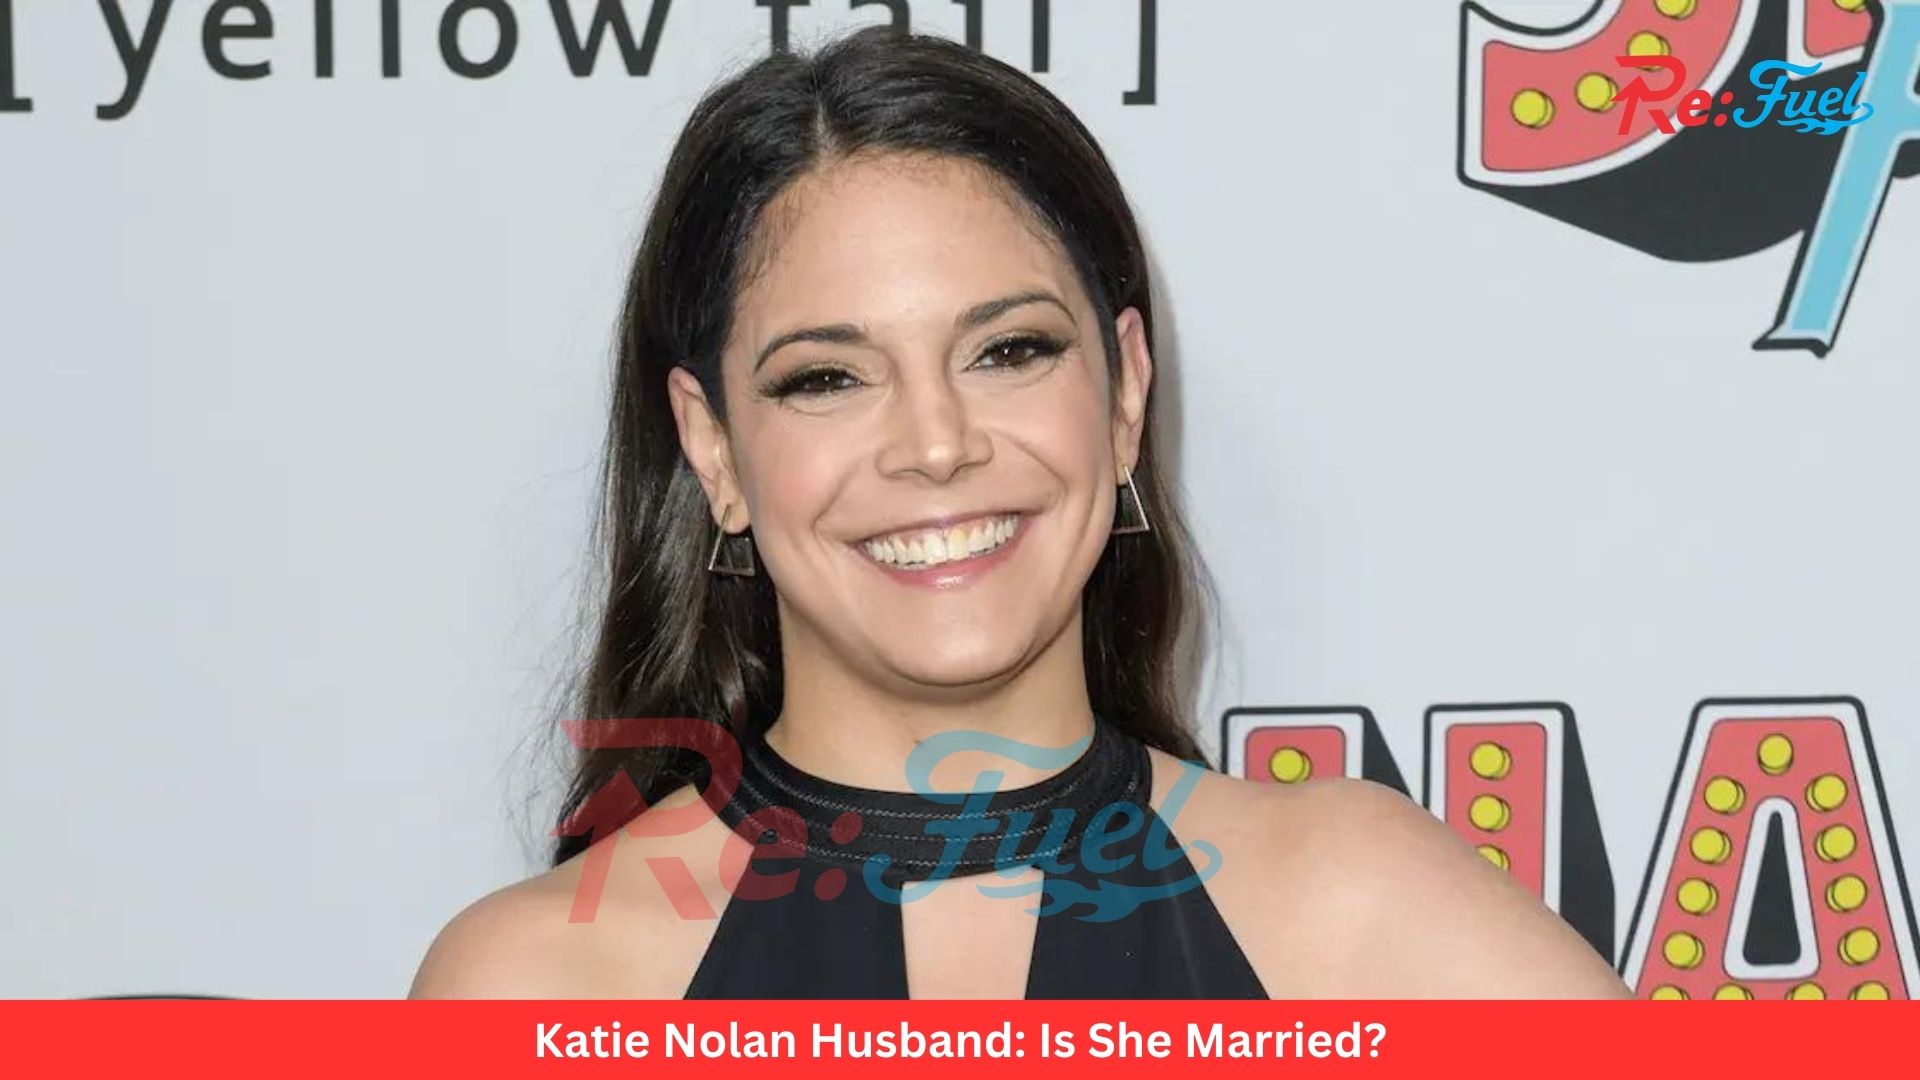 Katie Nolan Husband: Is She Married?